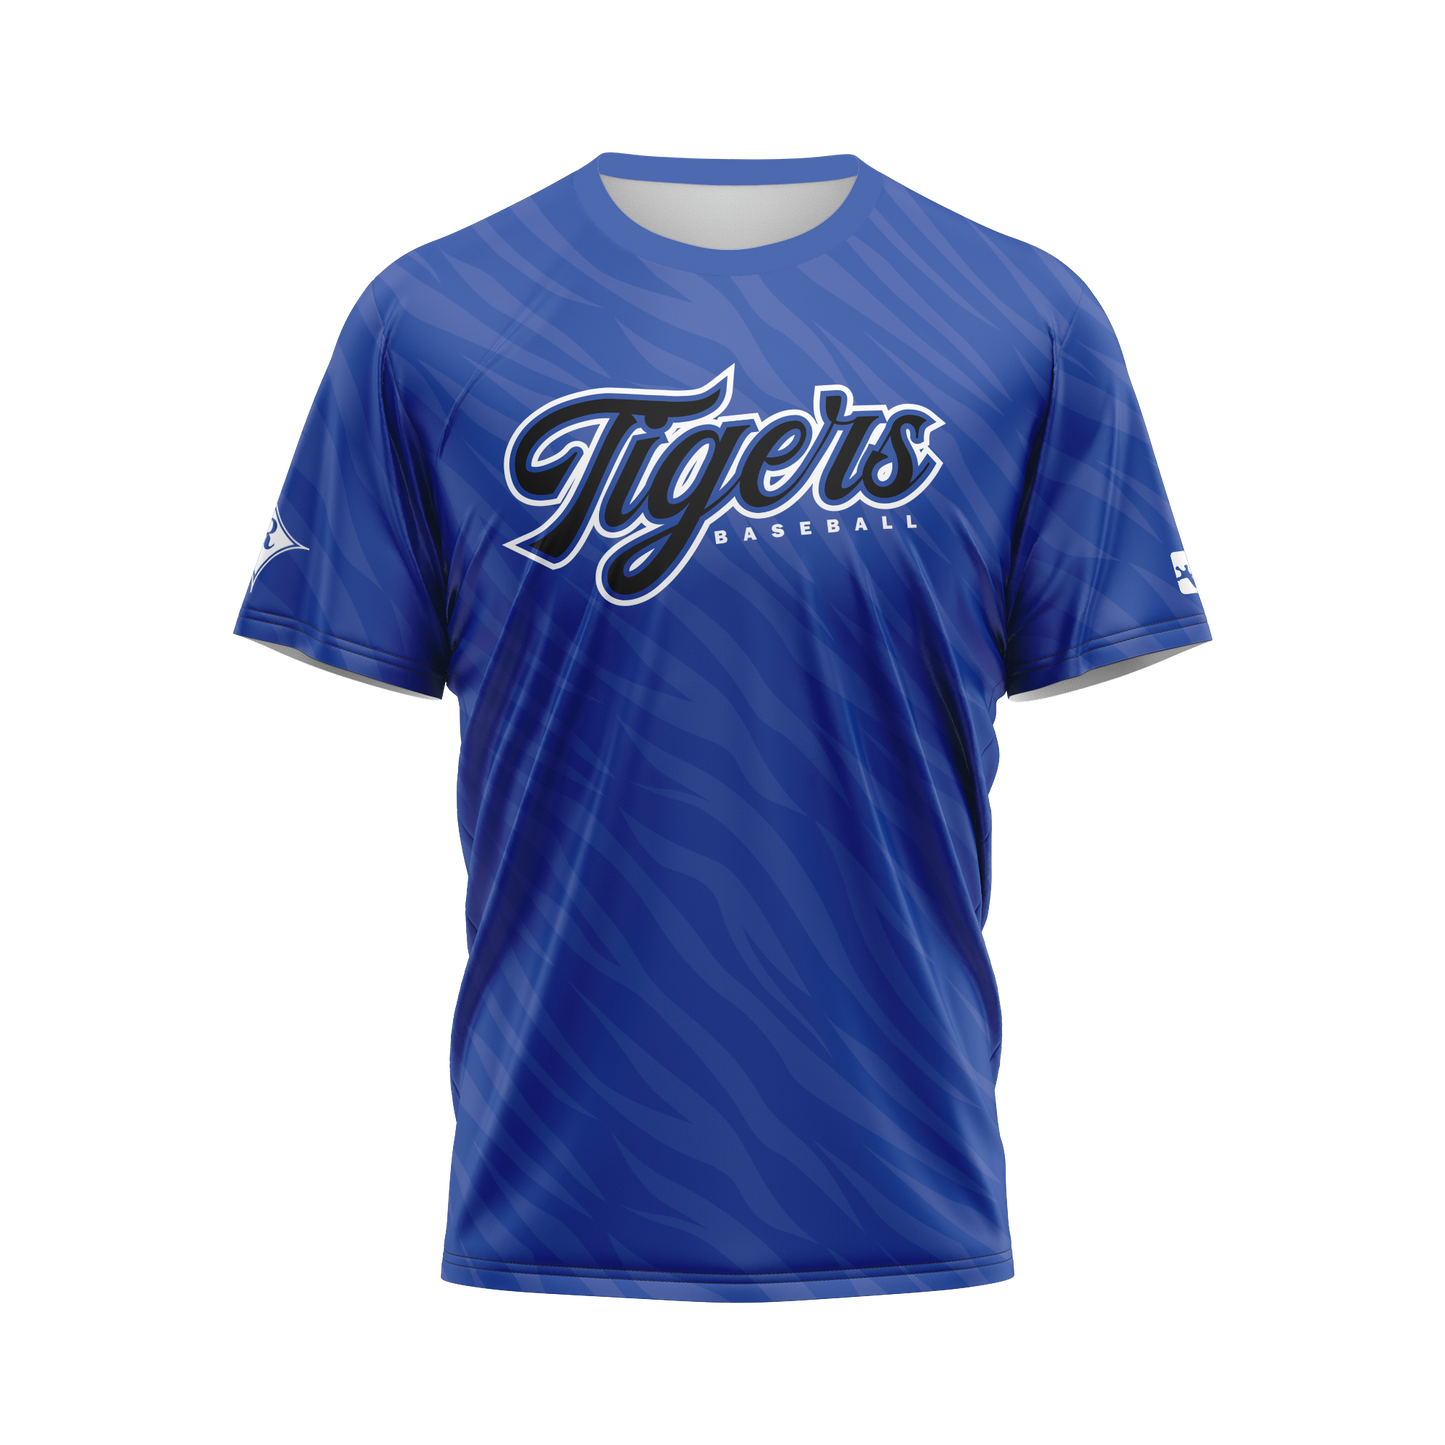 Ragsdale Tigers Performance Shirt - Royal